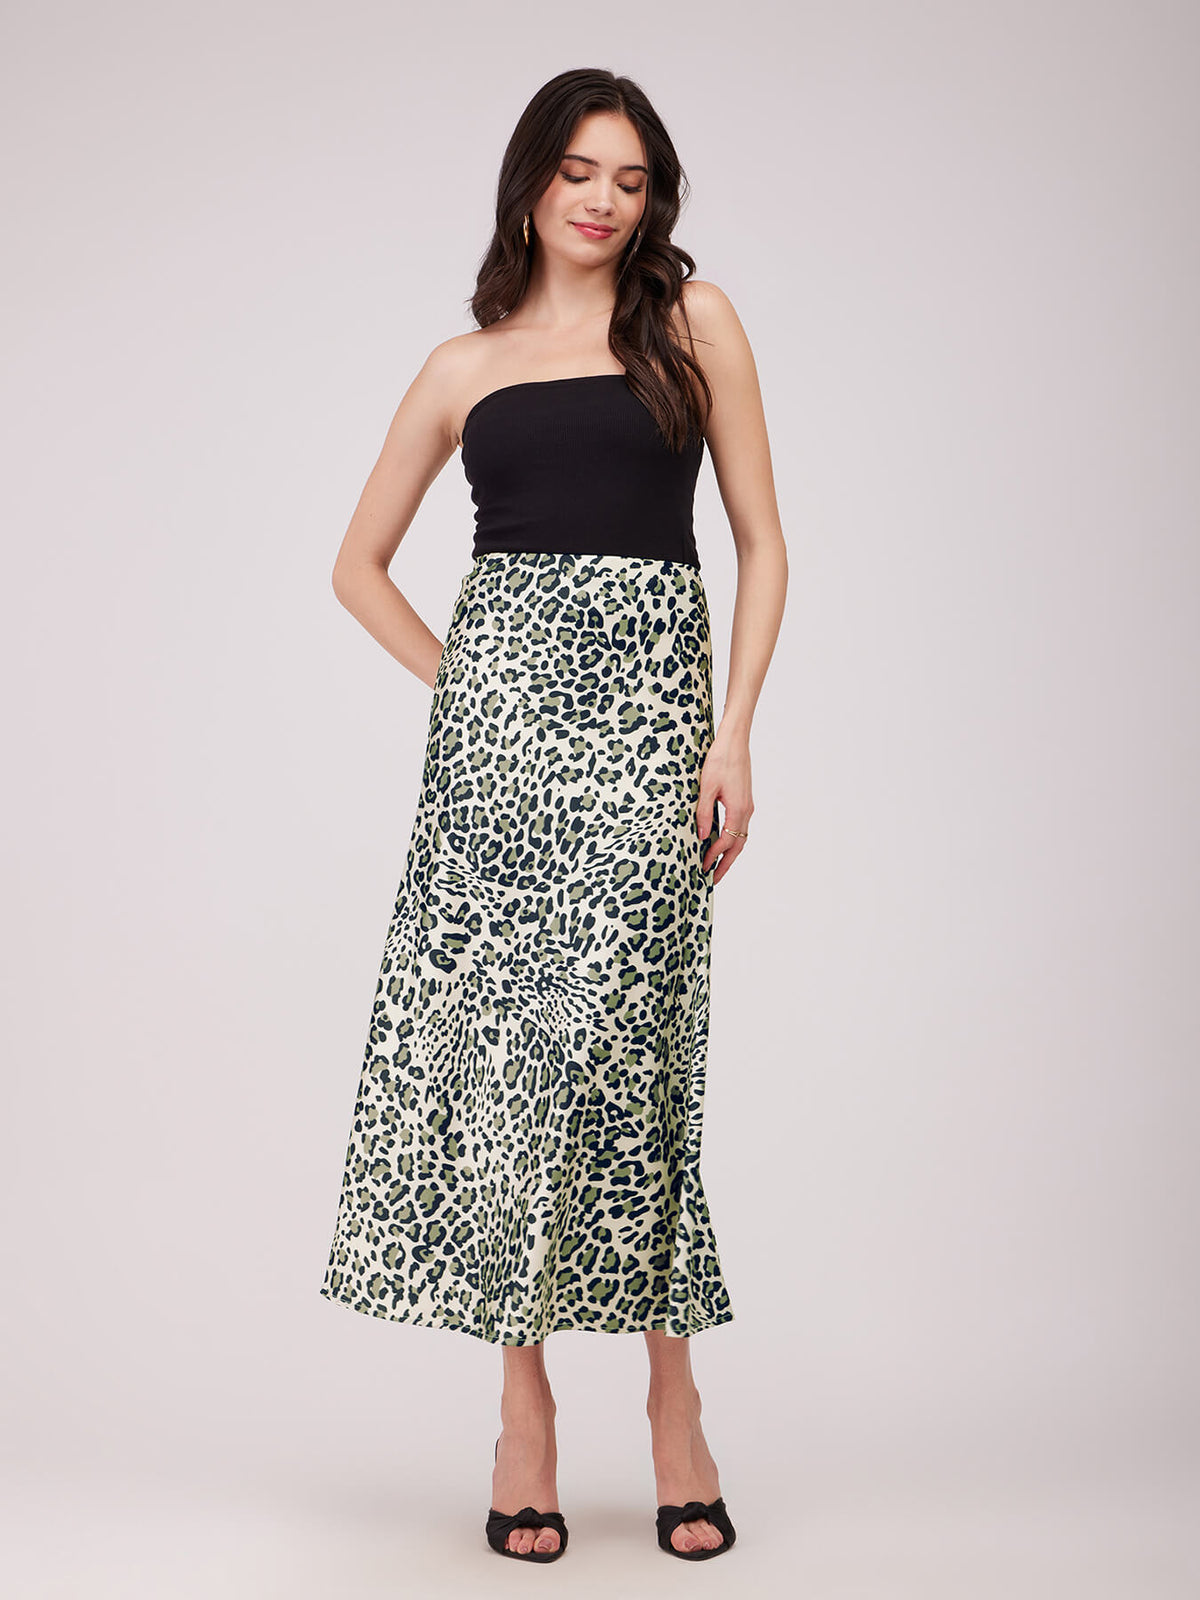 Stretch Satin Animal Print Skirt - Beige And Olive